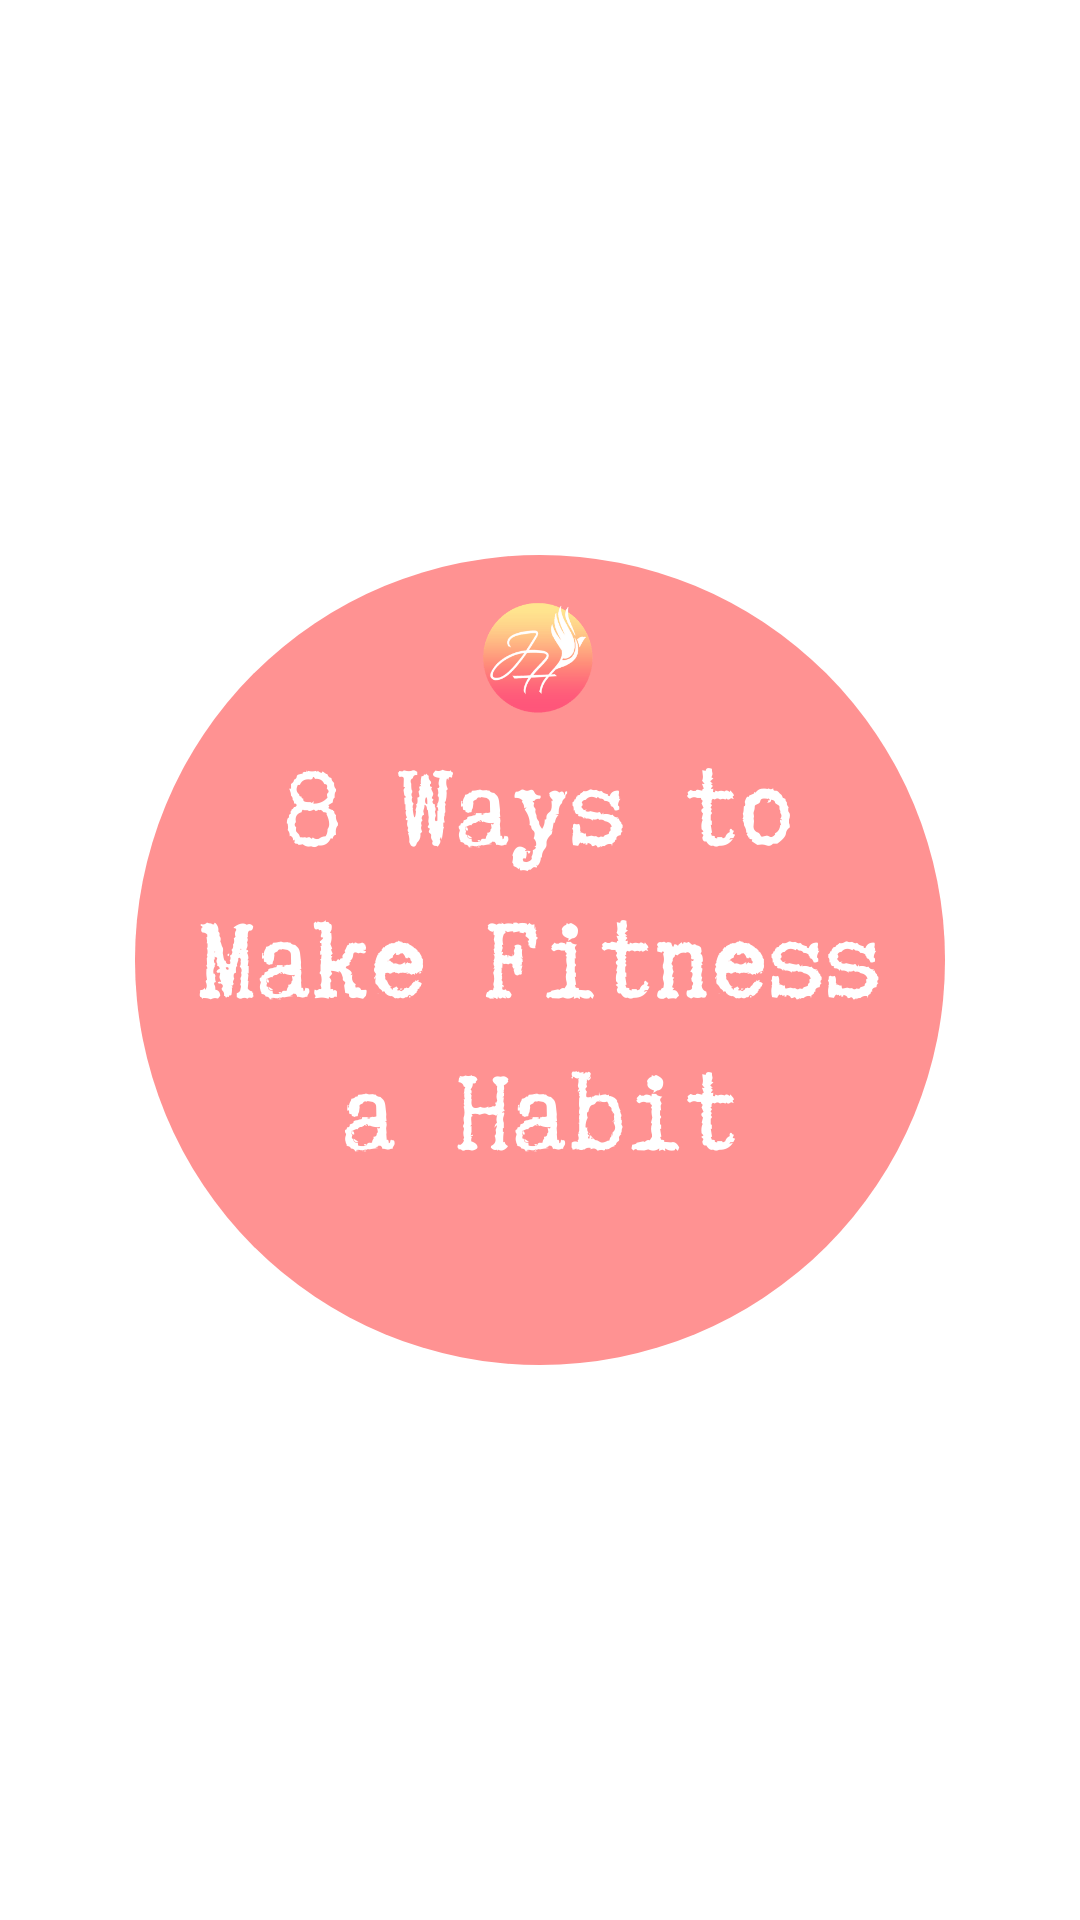 8 Ways to Make Fitness a Habit